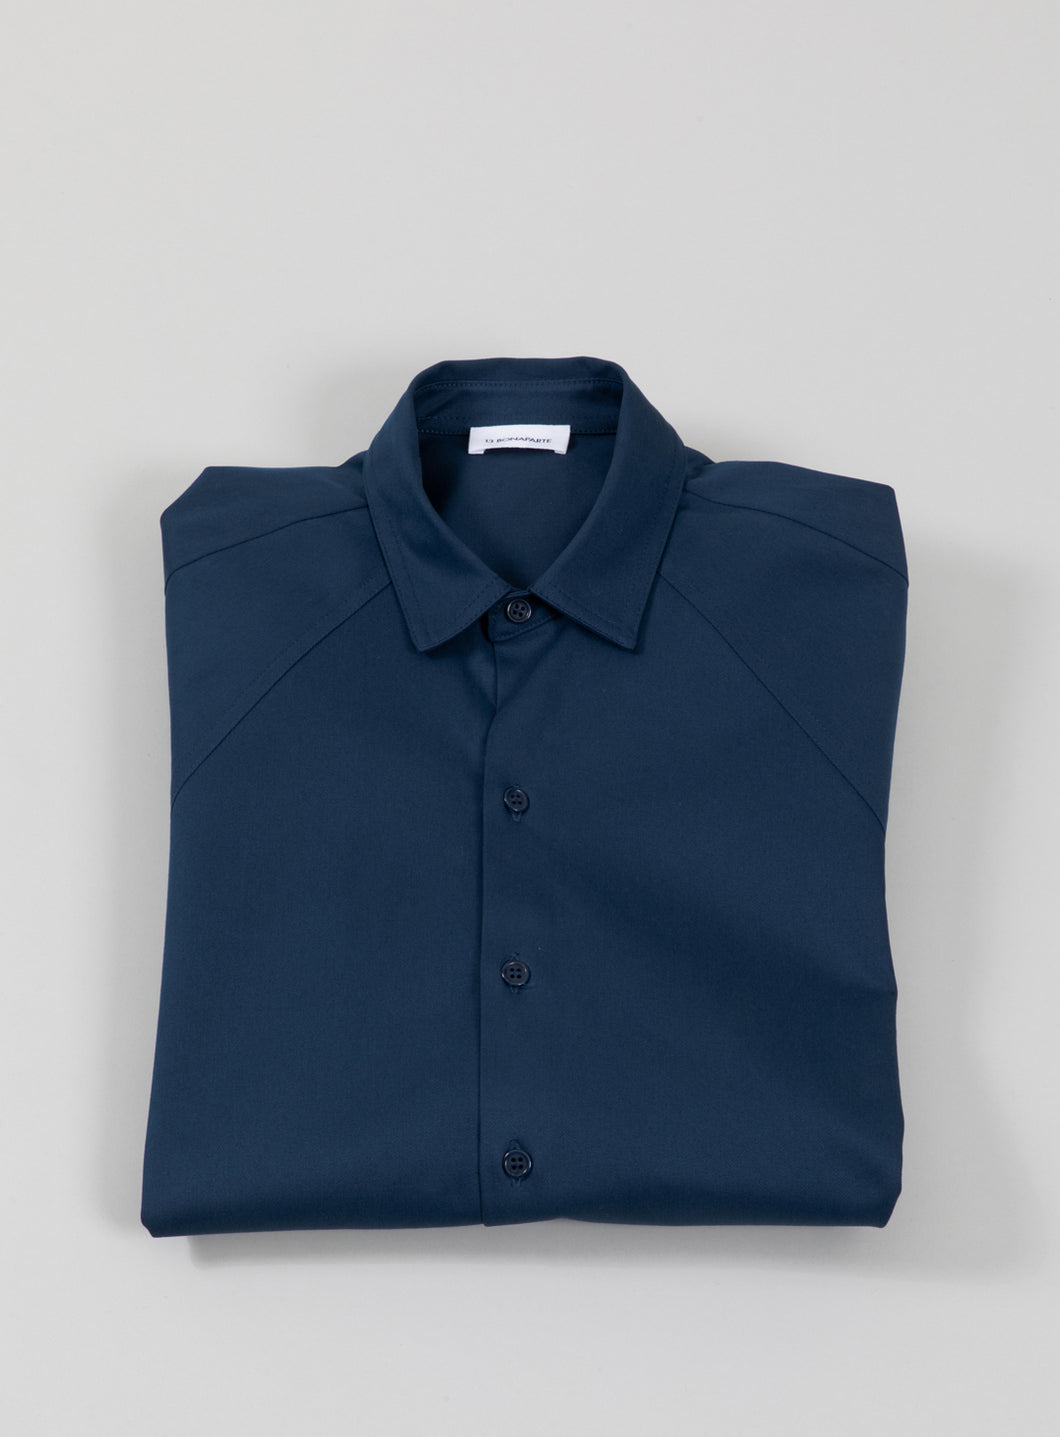 Raglan Sleeve Overshirt in Petrol Blue Cotton Gabardine